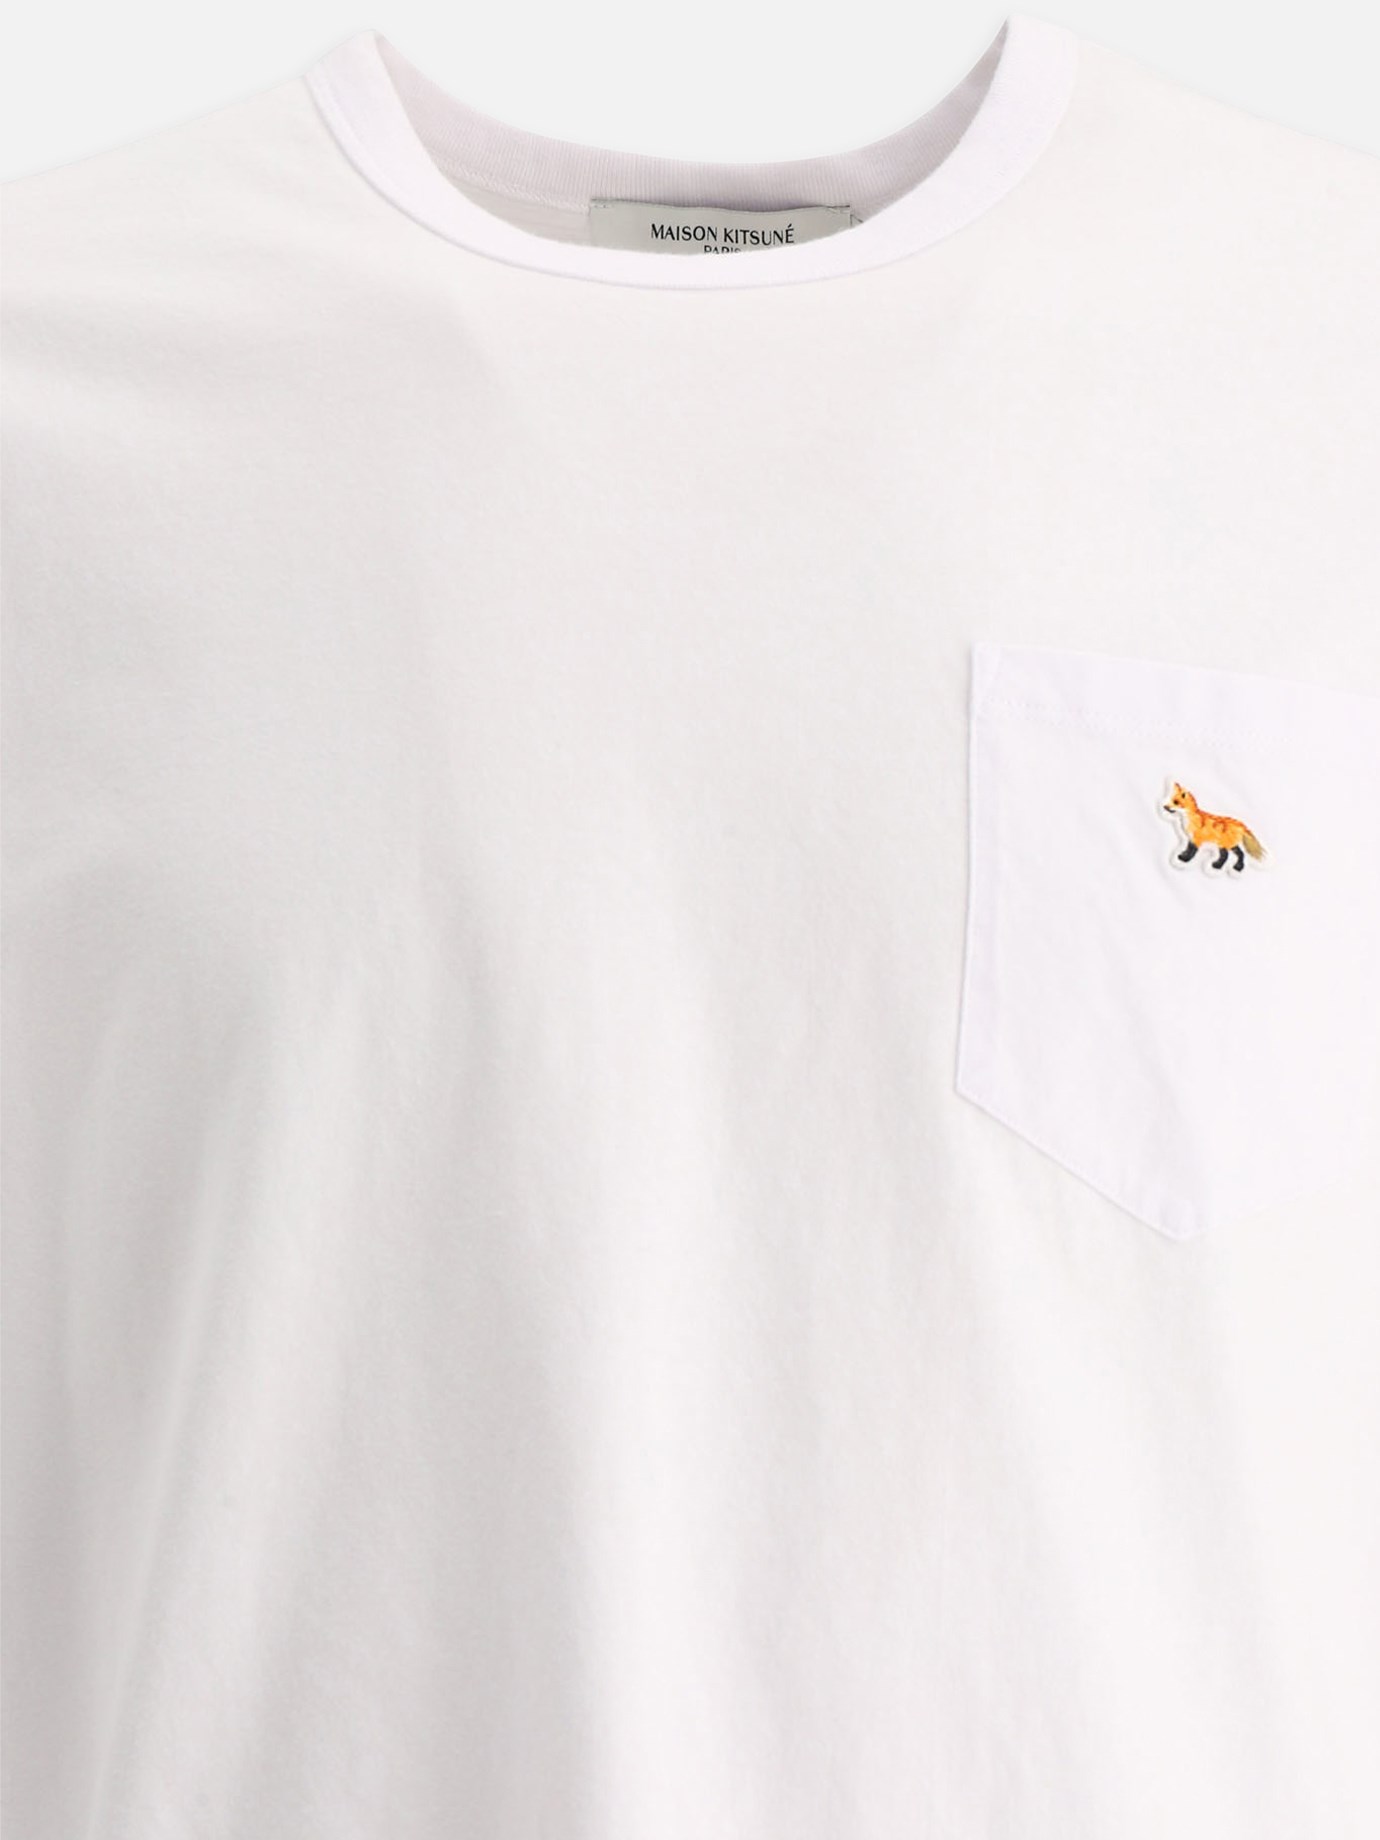 T-shirt  Baby Fox  by Maison Kitsuné